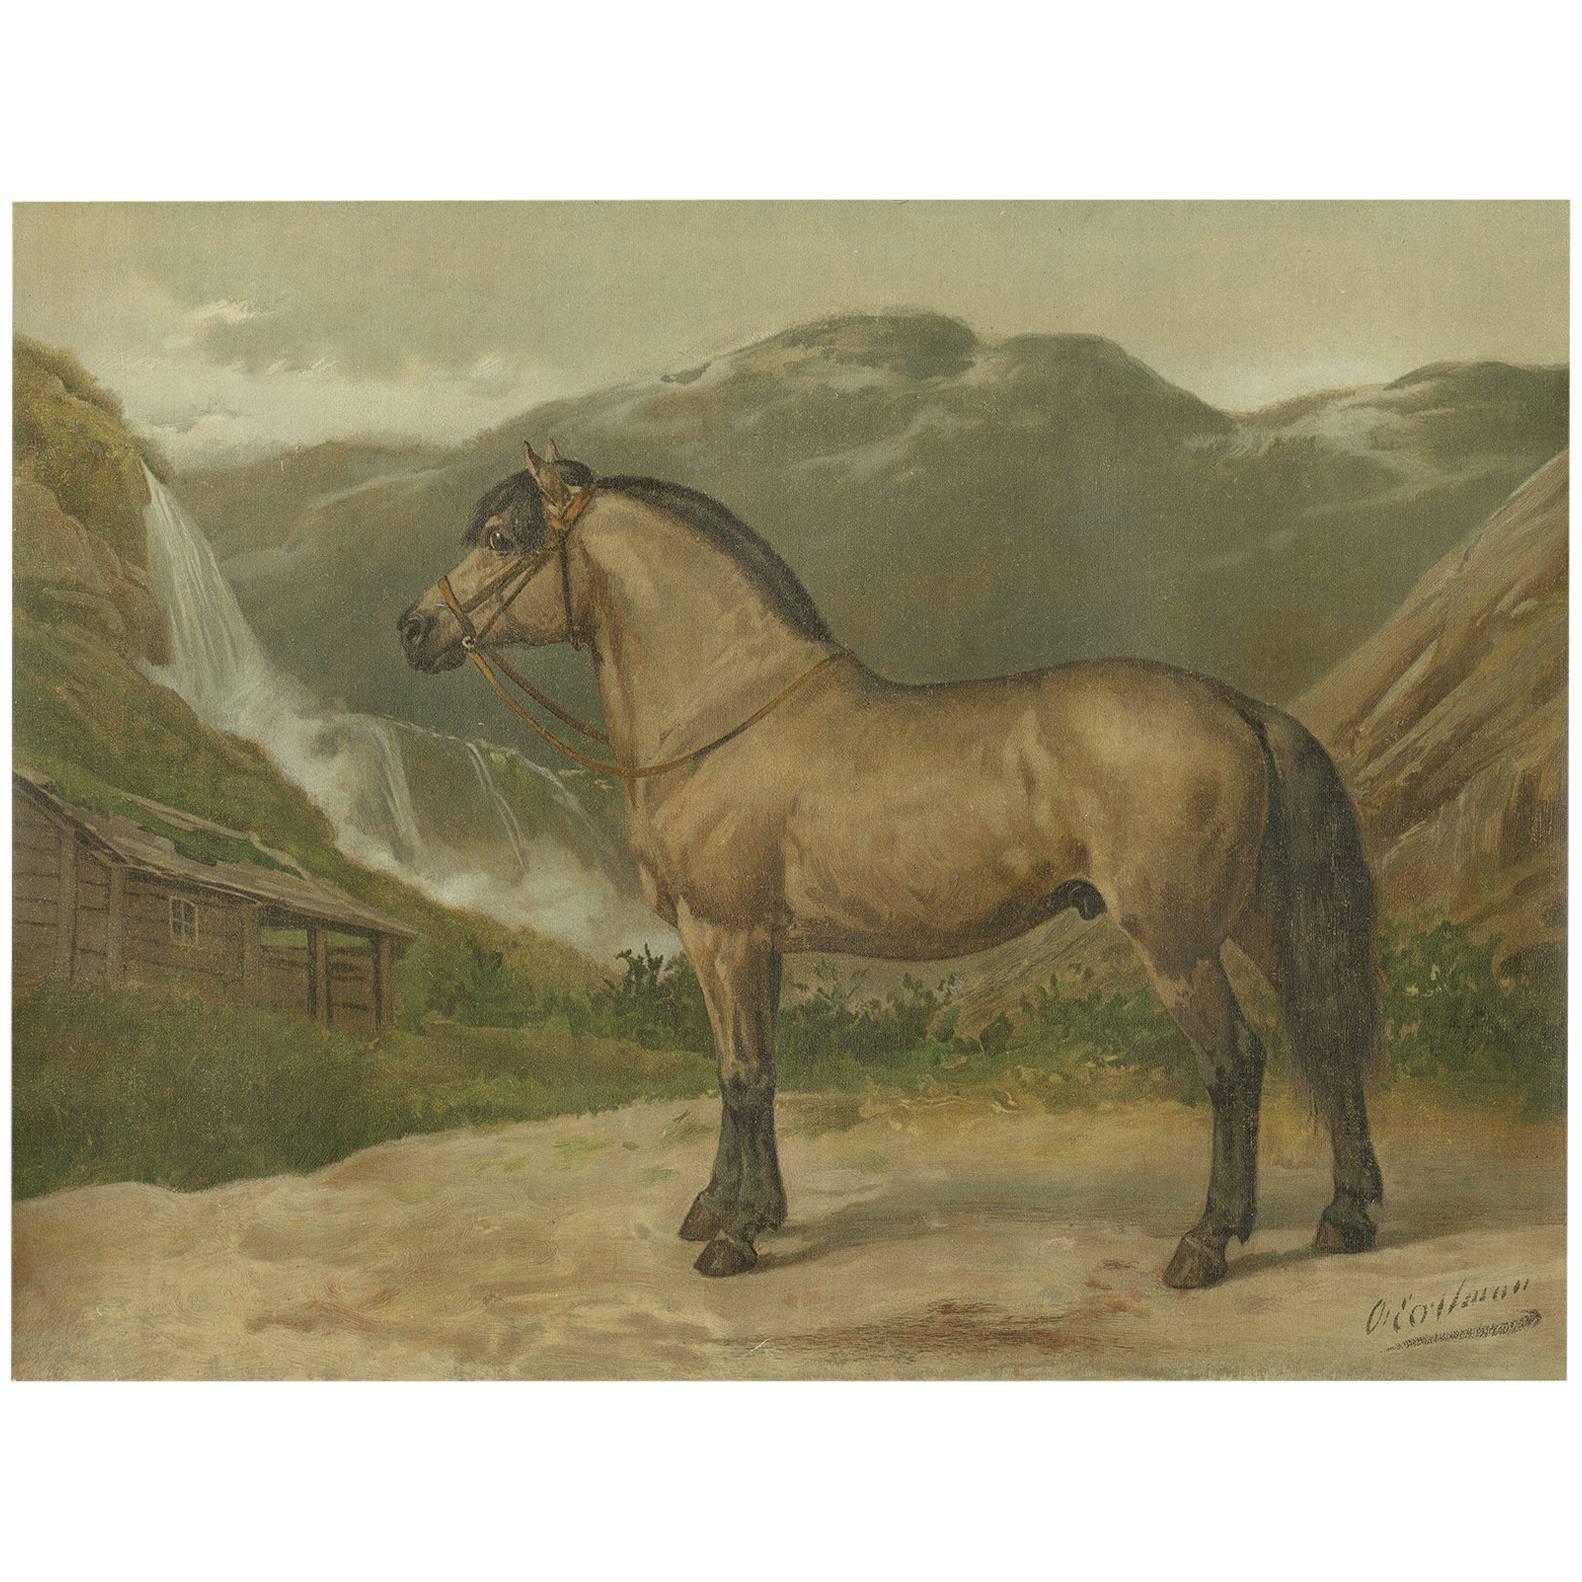 Antique Print of the Norwegian Horse by O. Eerelman, 1898